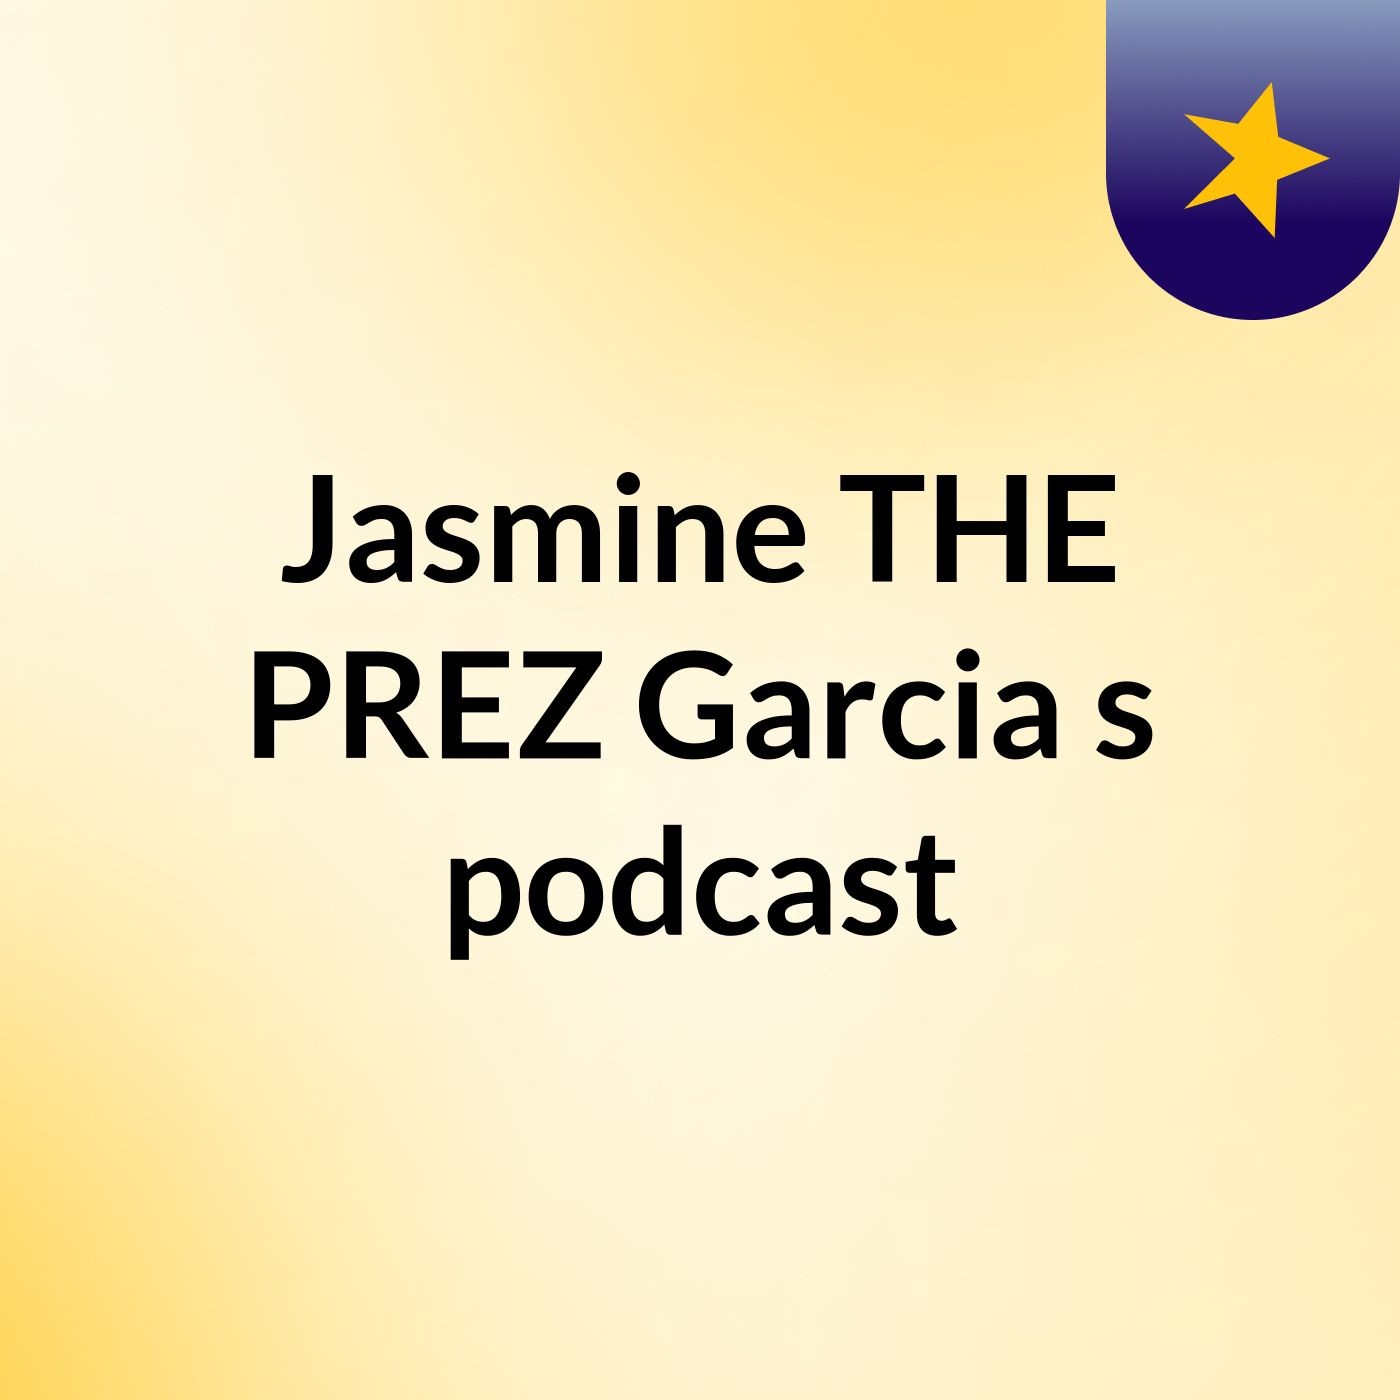 Episode 3 - Jasmine THE PREZ Garcia's podcast